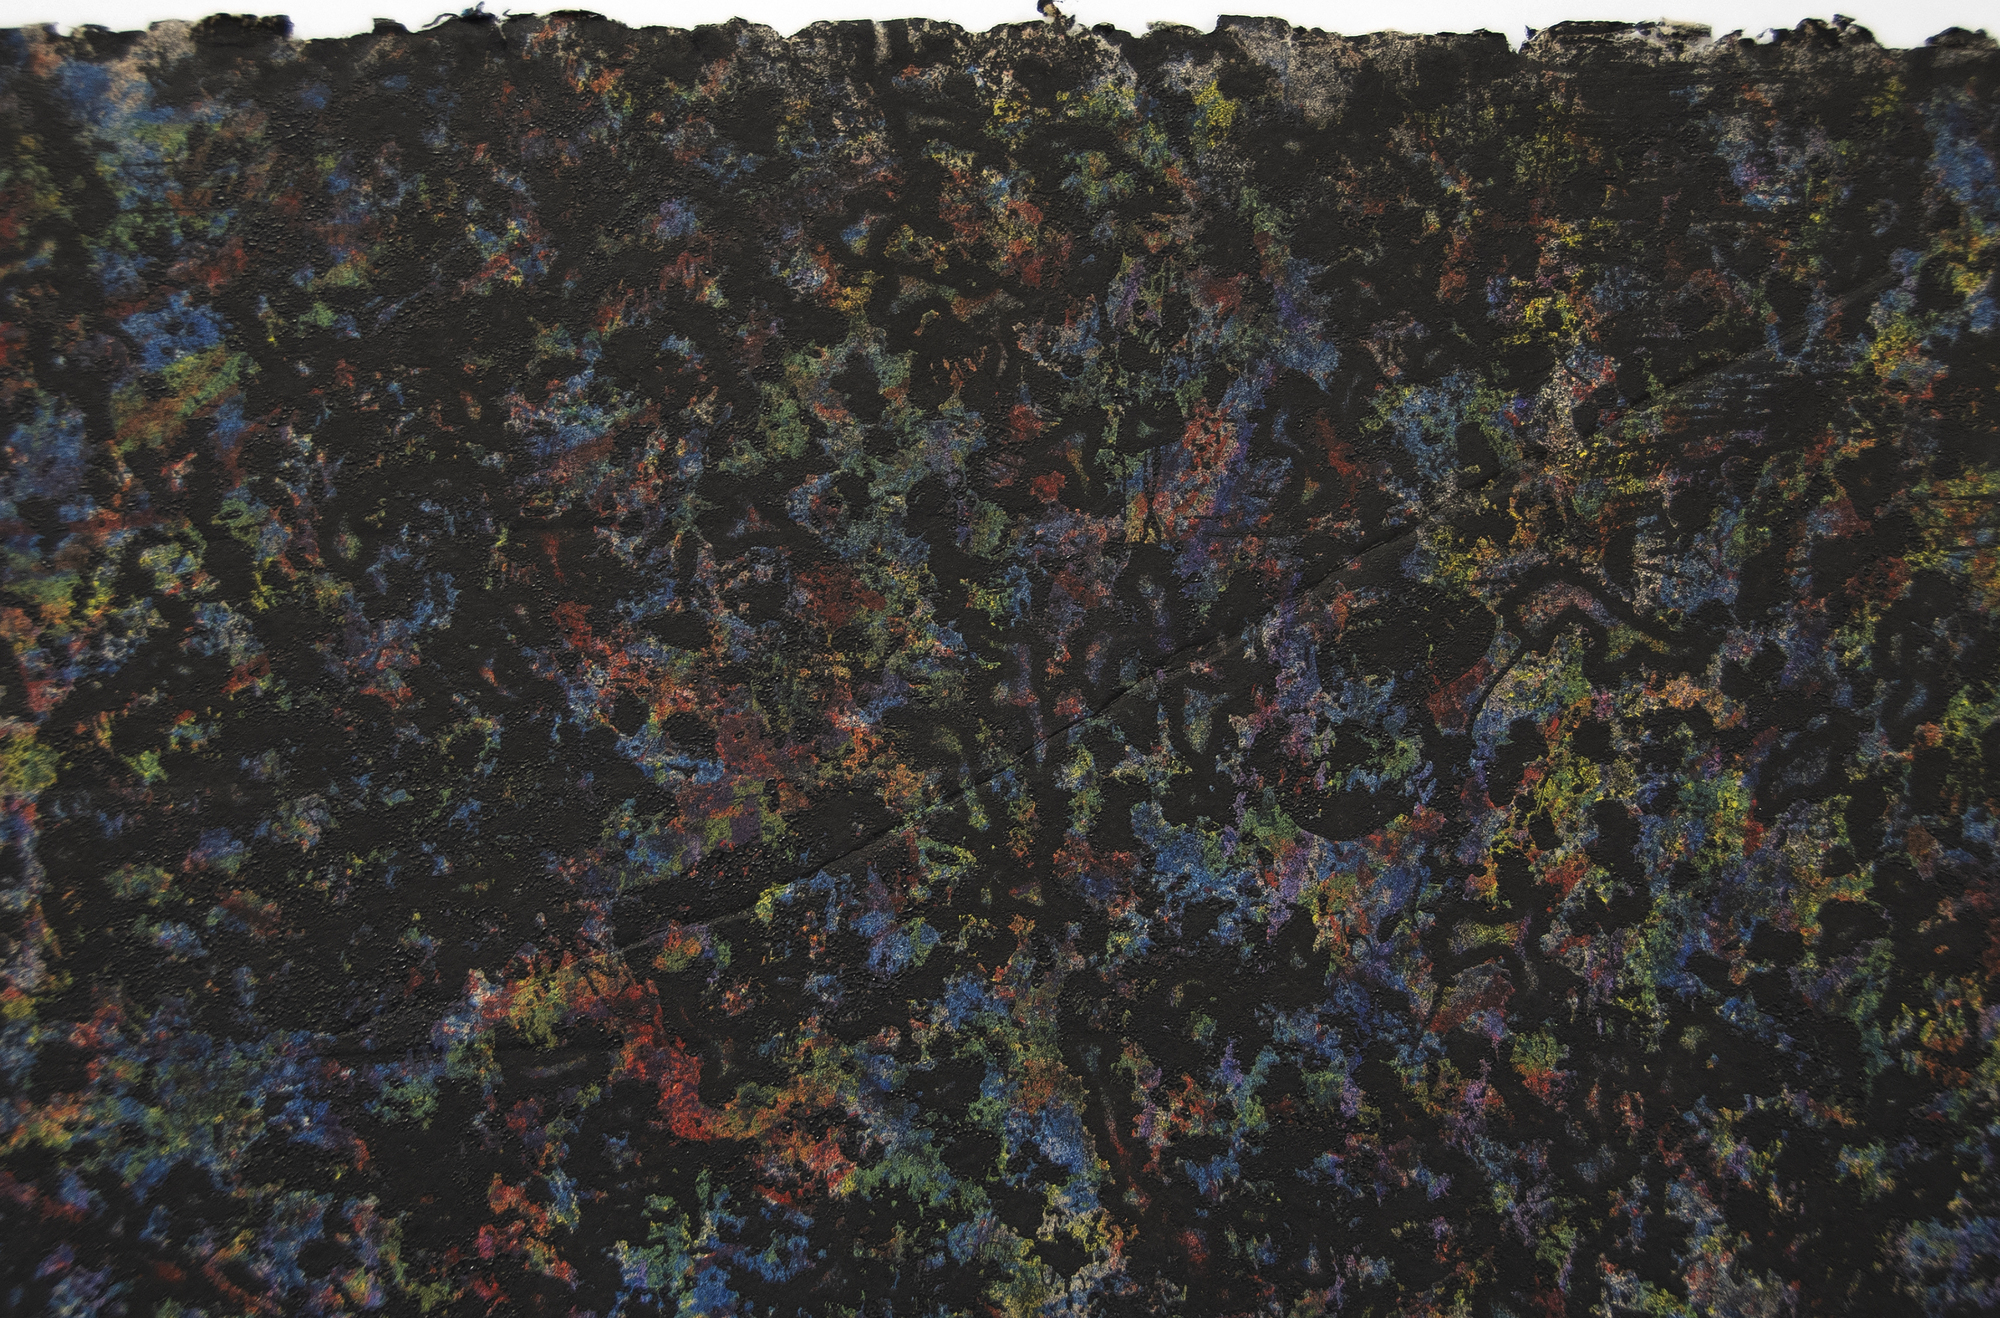 SAM GILLIAM - Coffee Thyme (Black) - カラーリトグラフ、ゴム印、ジョン・コラー社製HMP紙にエンボス加工 - 31 3/4 x 44 in.